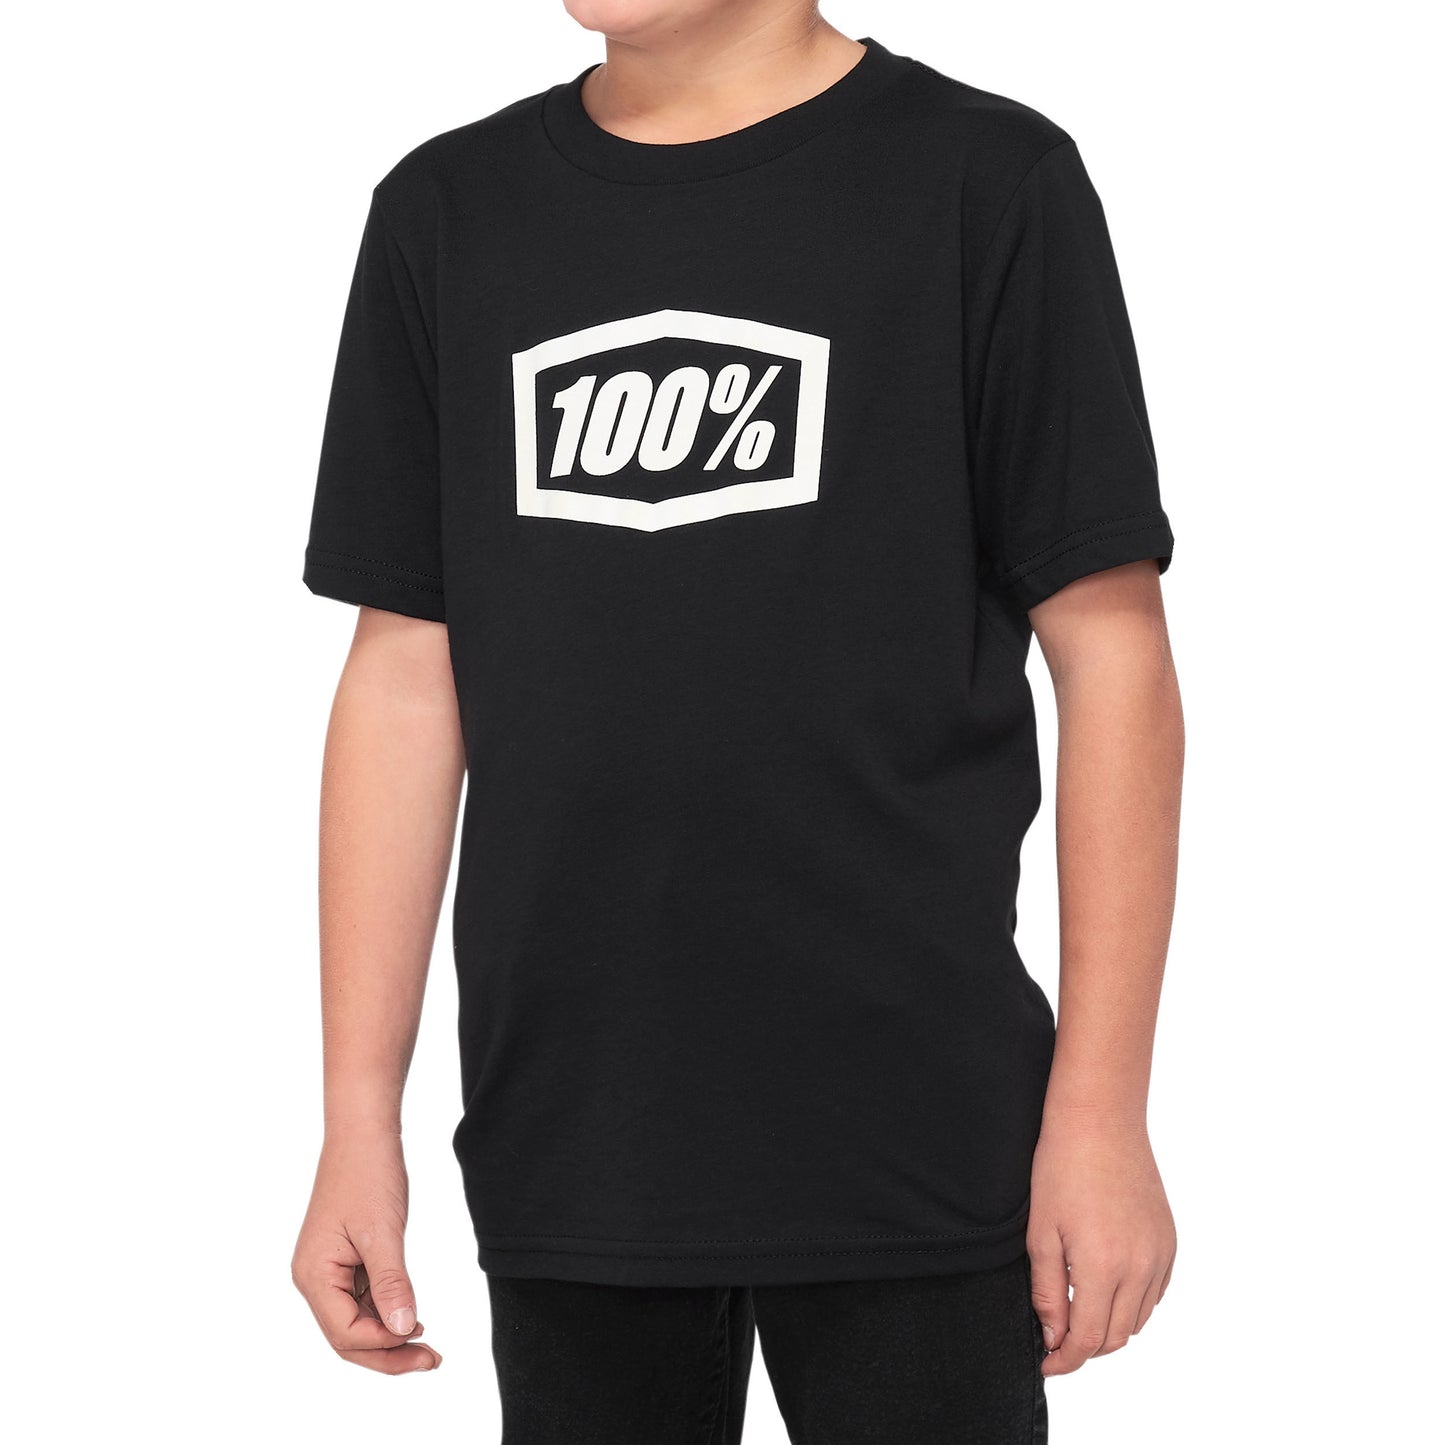 100% ICON Youth T-Shirt Black